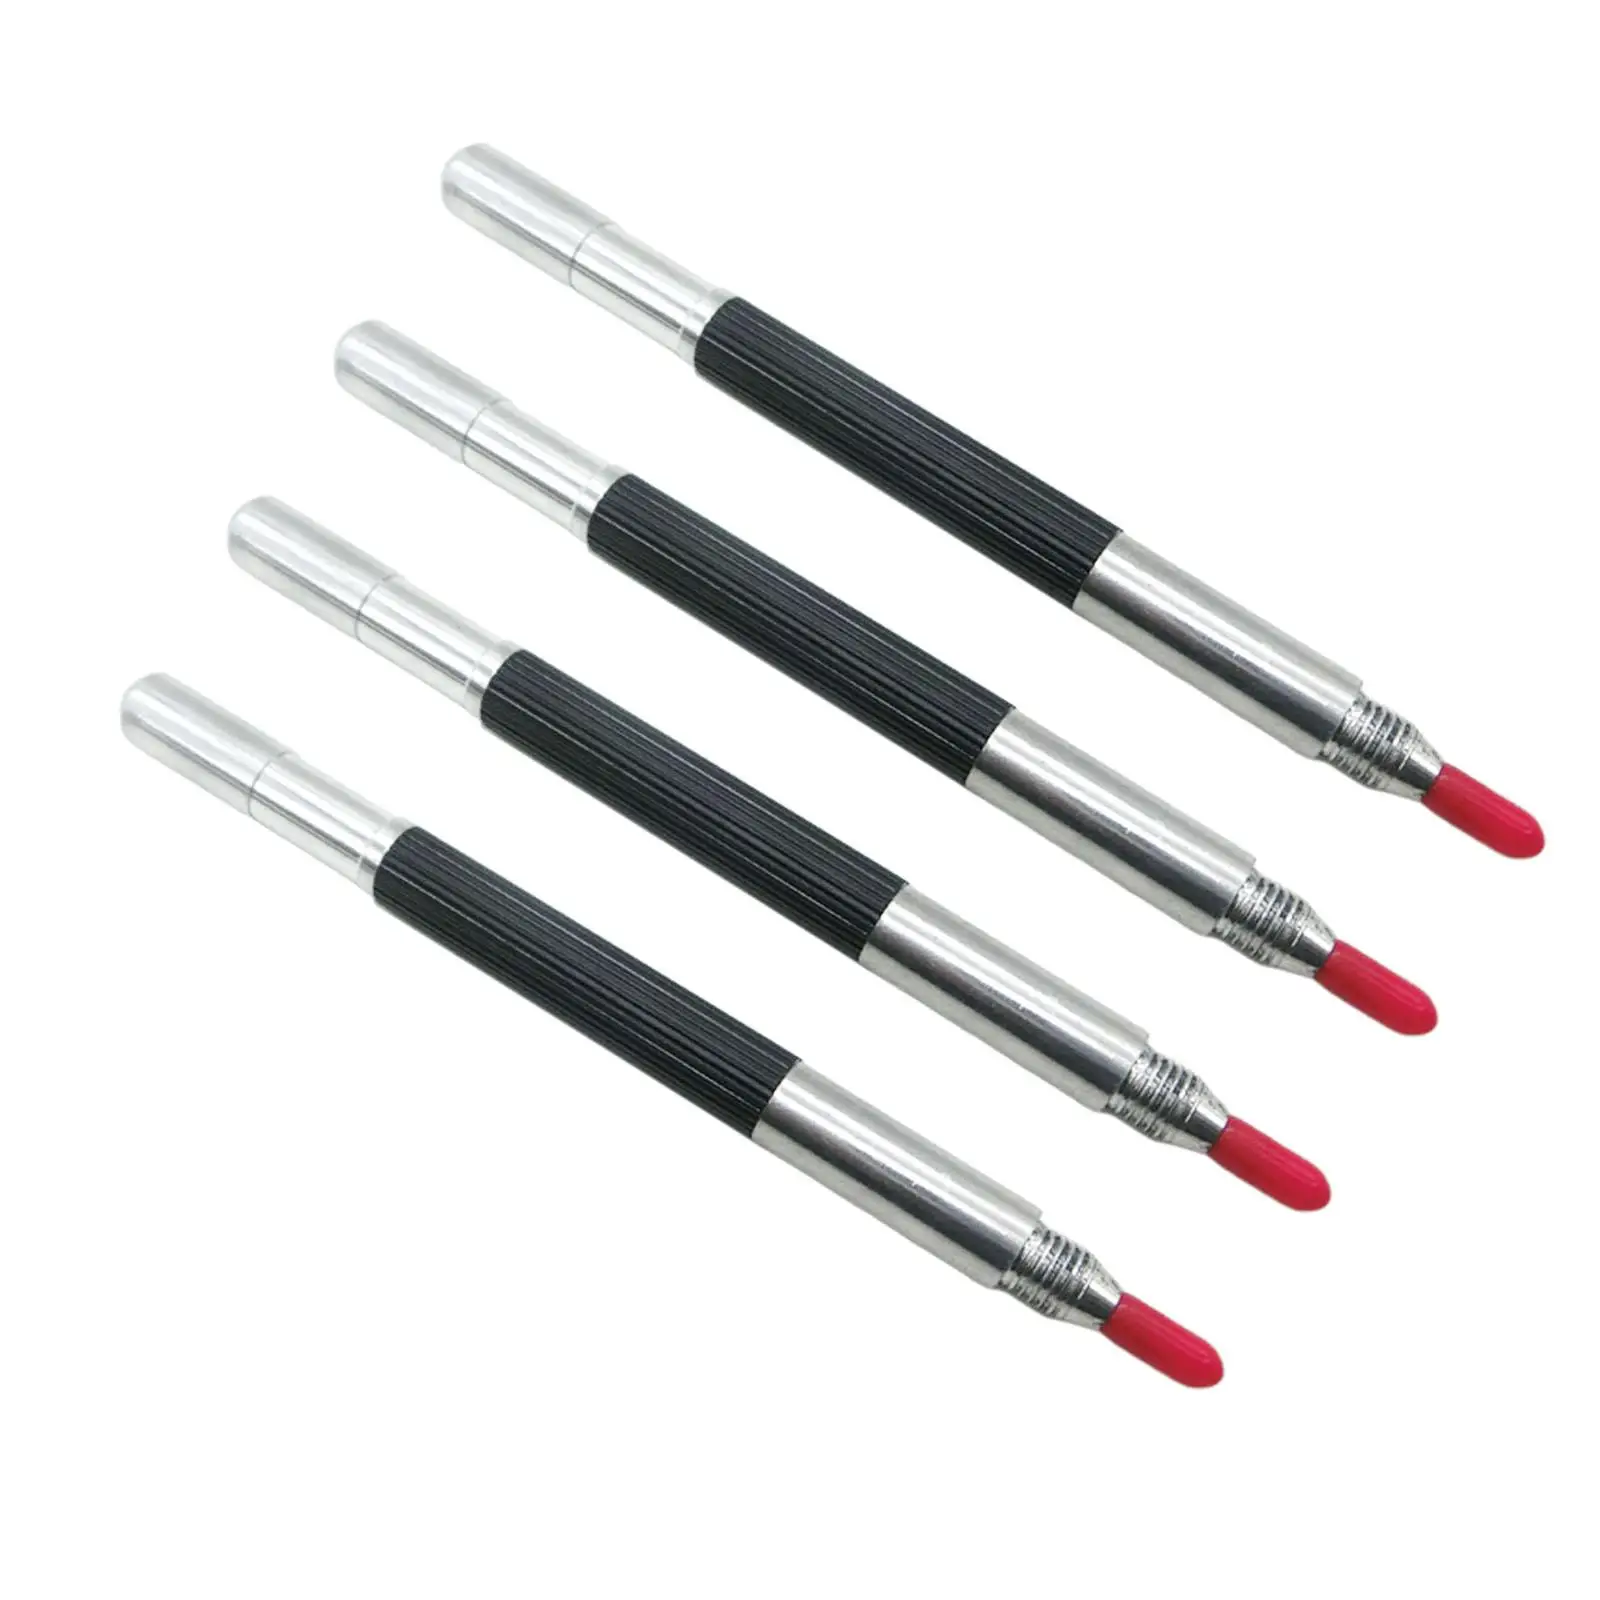 4x Engraving Pen Long Nib Double Ended Construction Marking Tools Deep Reach Markers Durable Tungsten Carbide Scribing Pens for